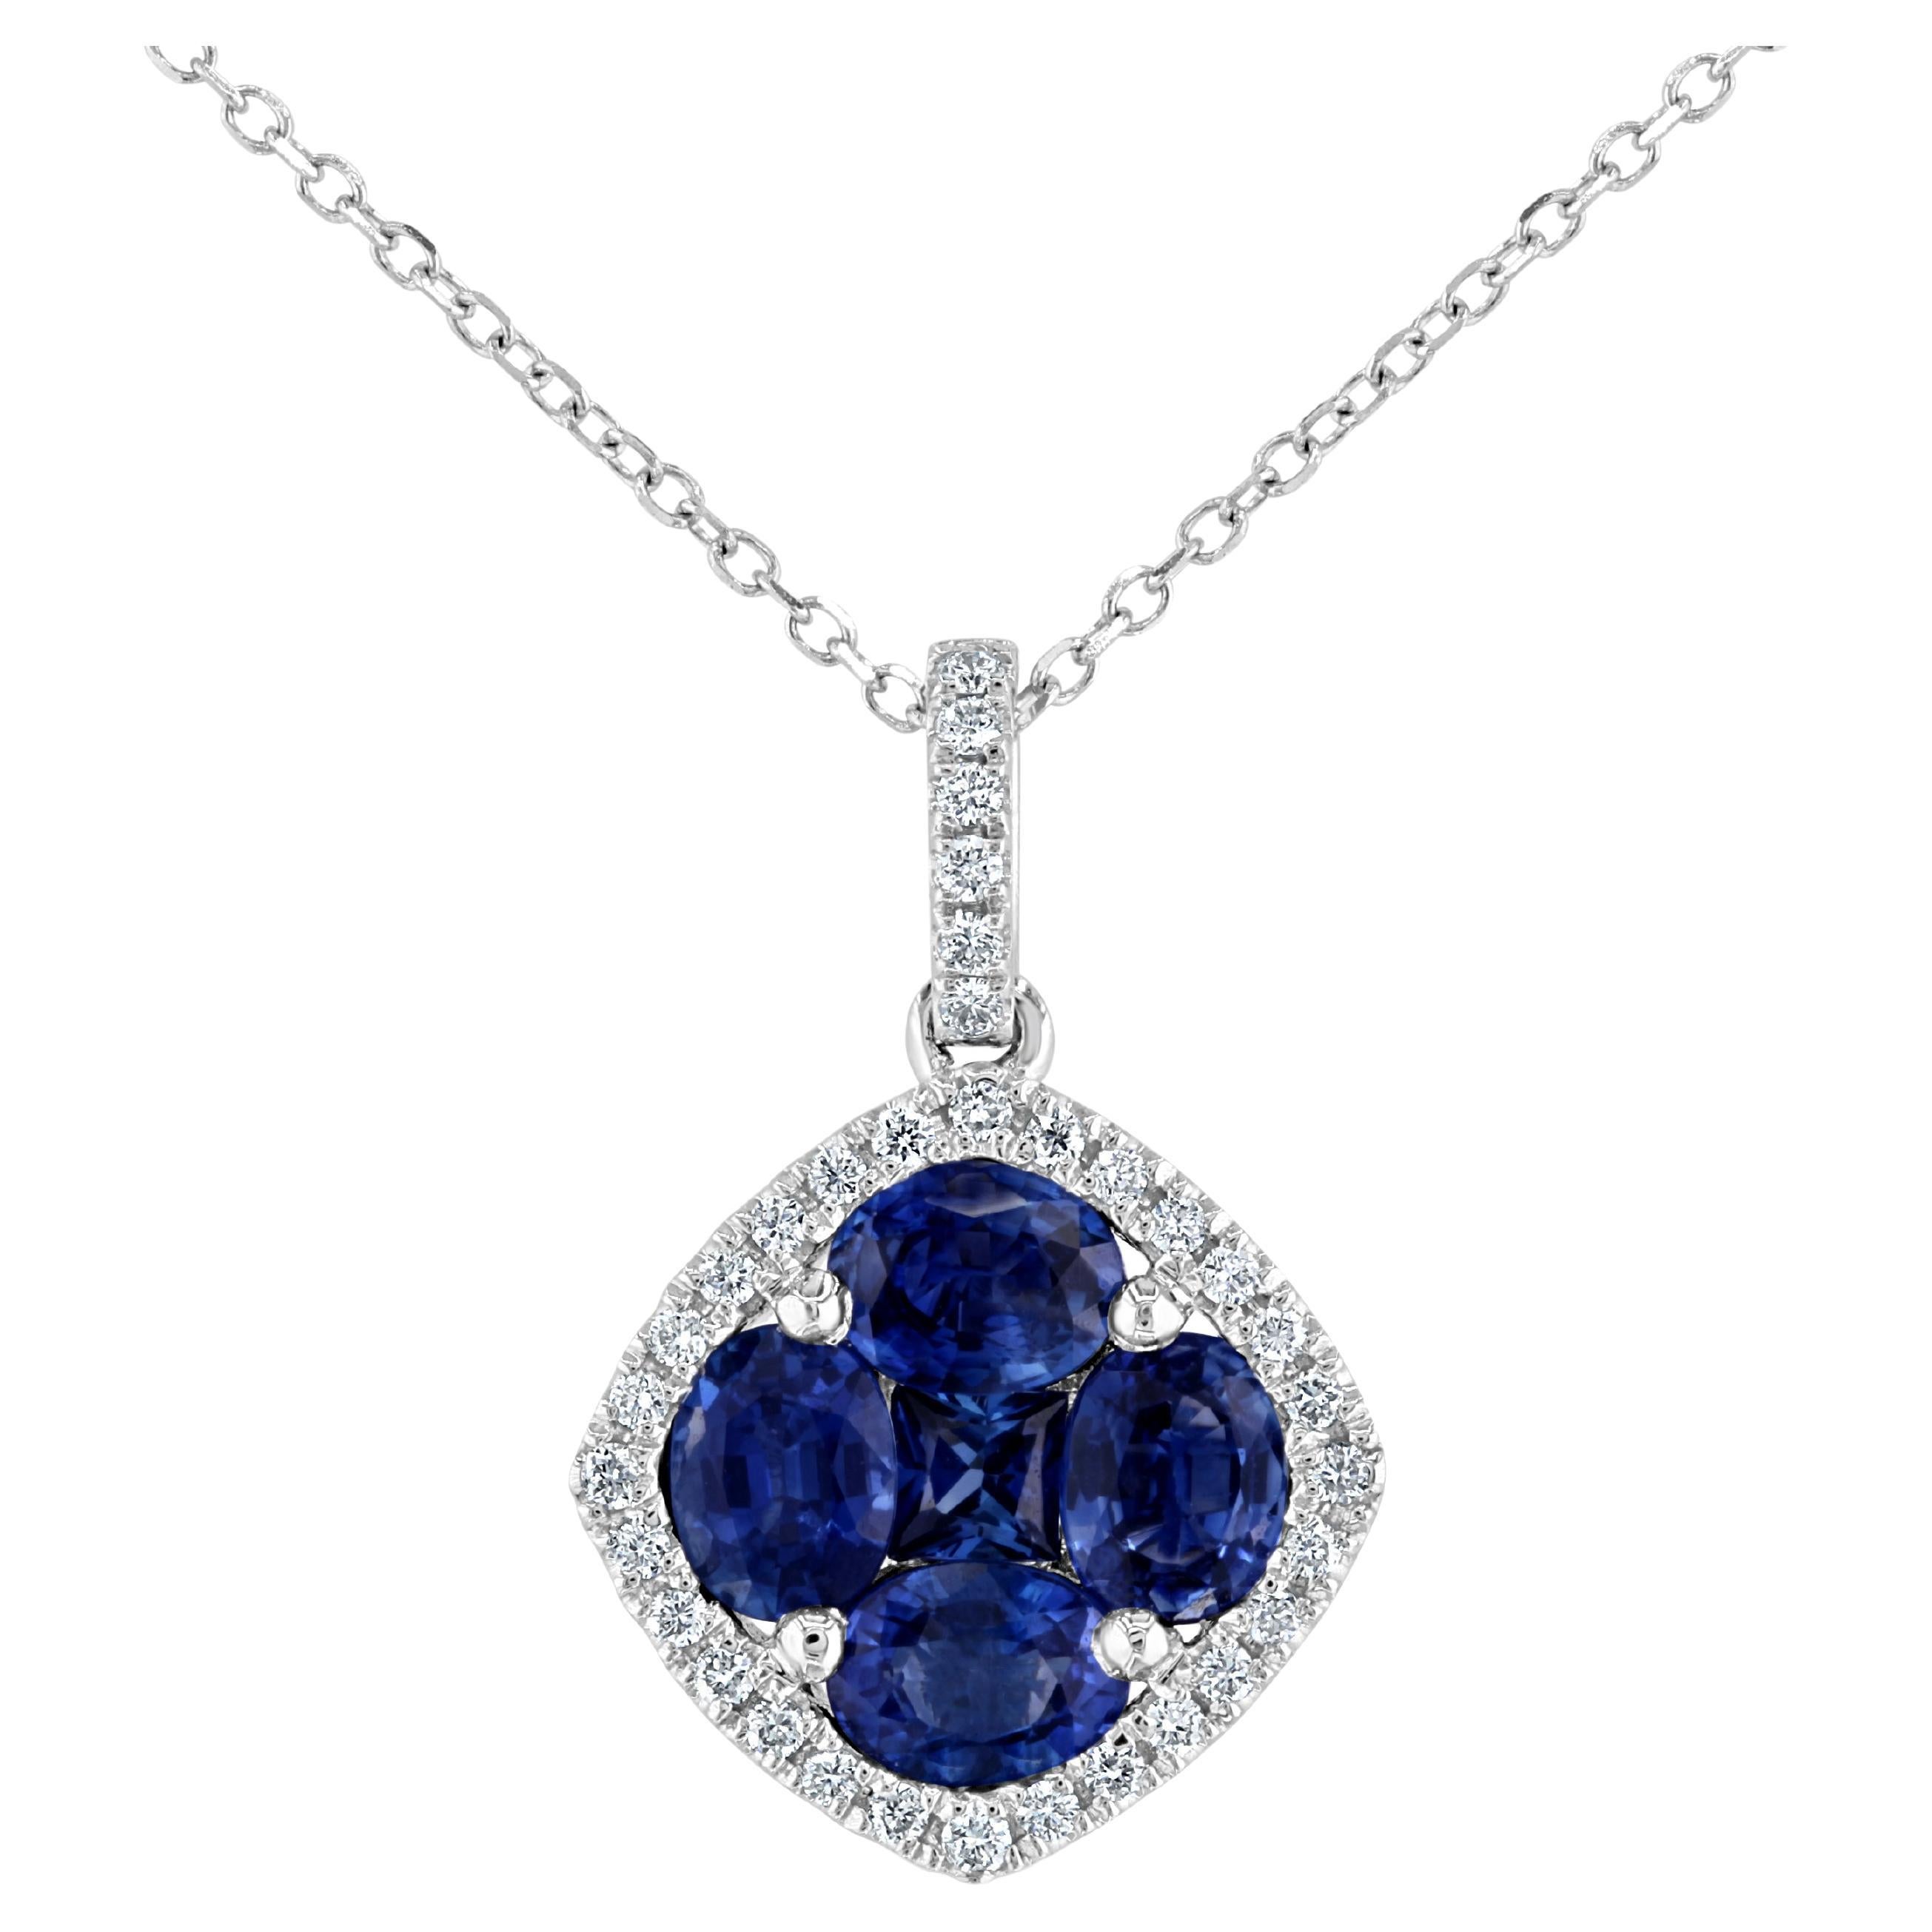 1.31 Carat Vivid Blue Sapphire and 0.13 Ct Diamond Halo Pendant in 18W ref2236 For Sale